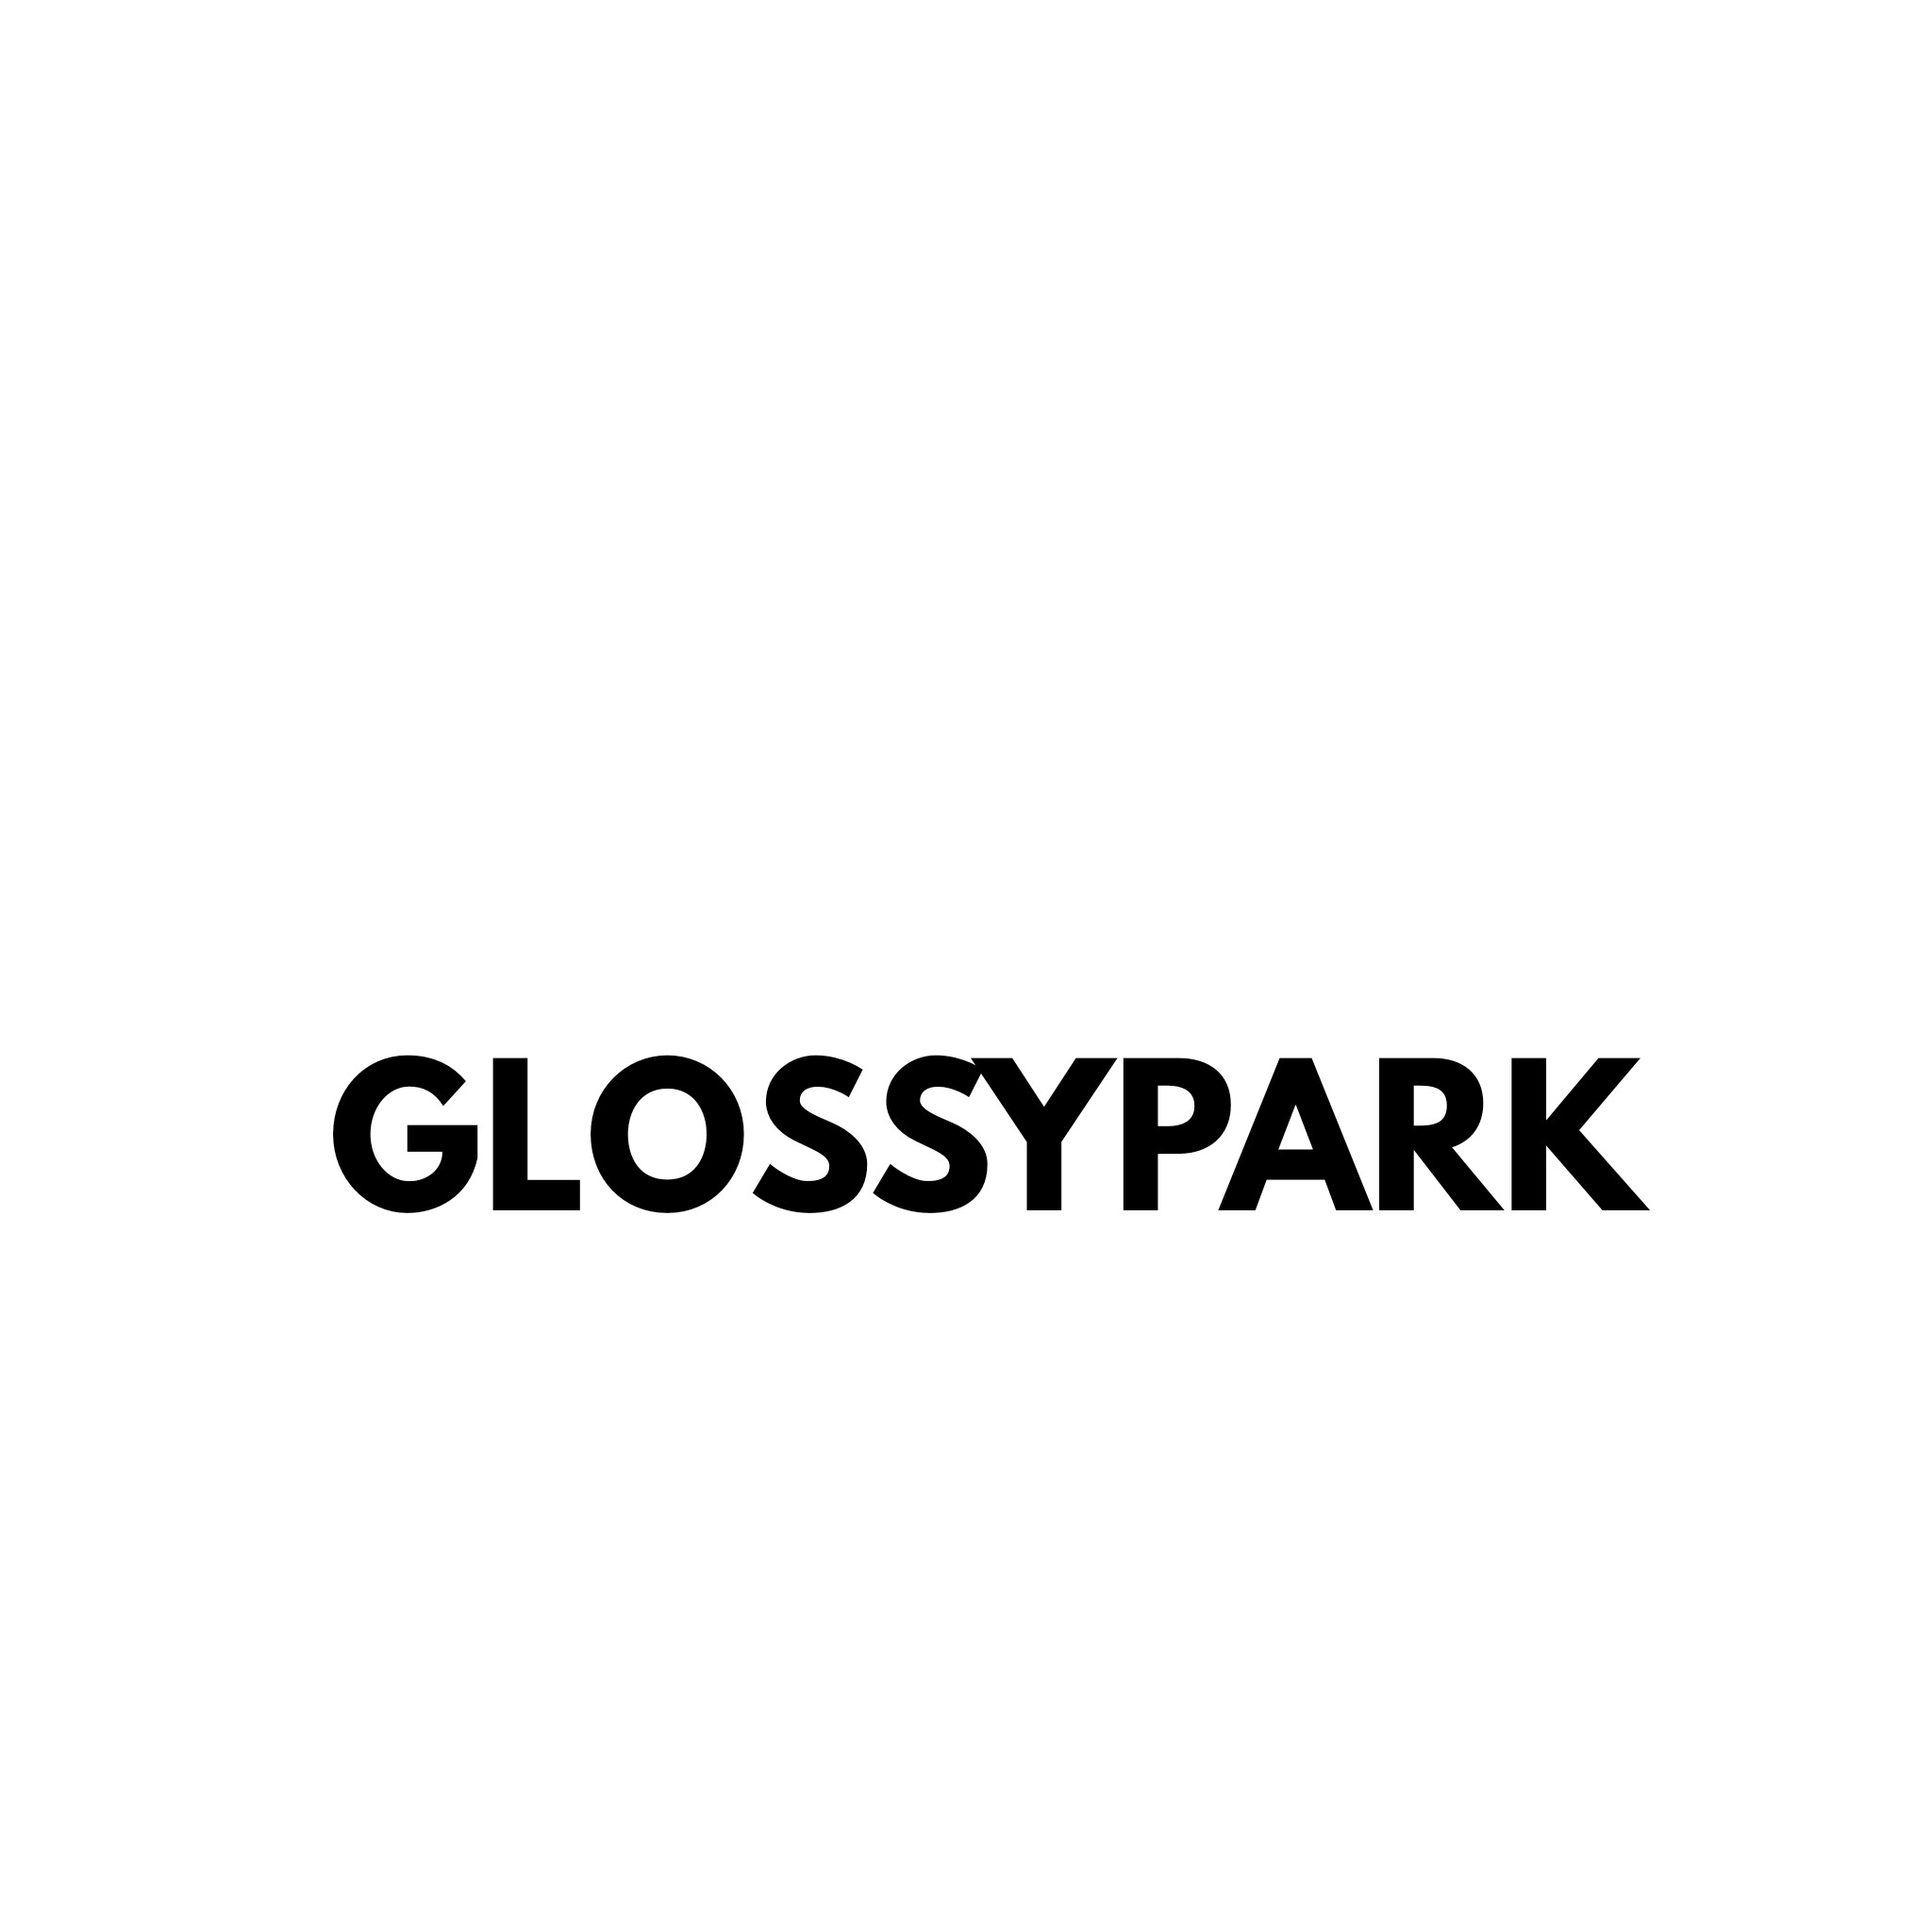 GlossyPark Bold.jpg